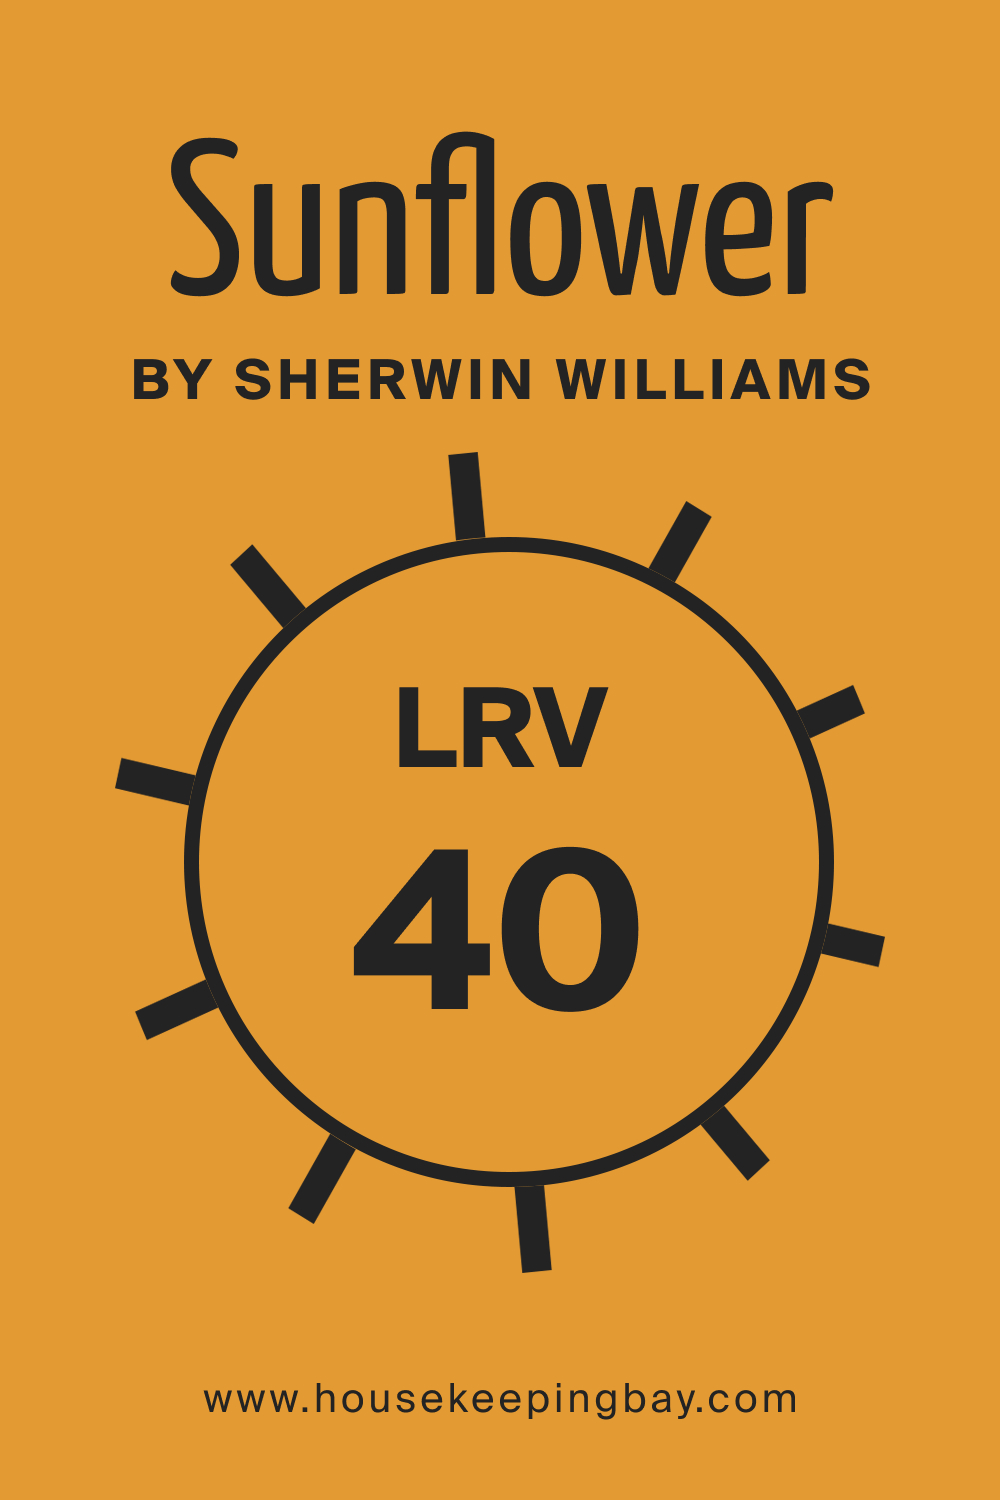 Sunflower SW 6678 by Sherwin Williams. LRV 40